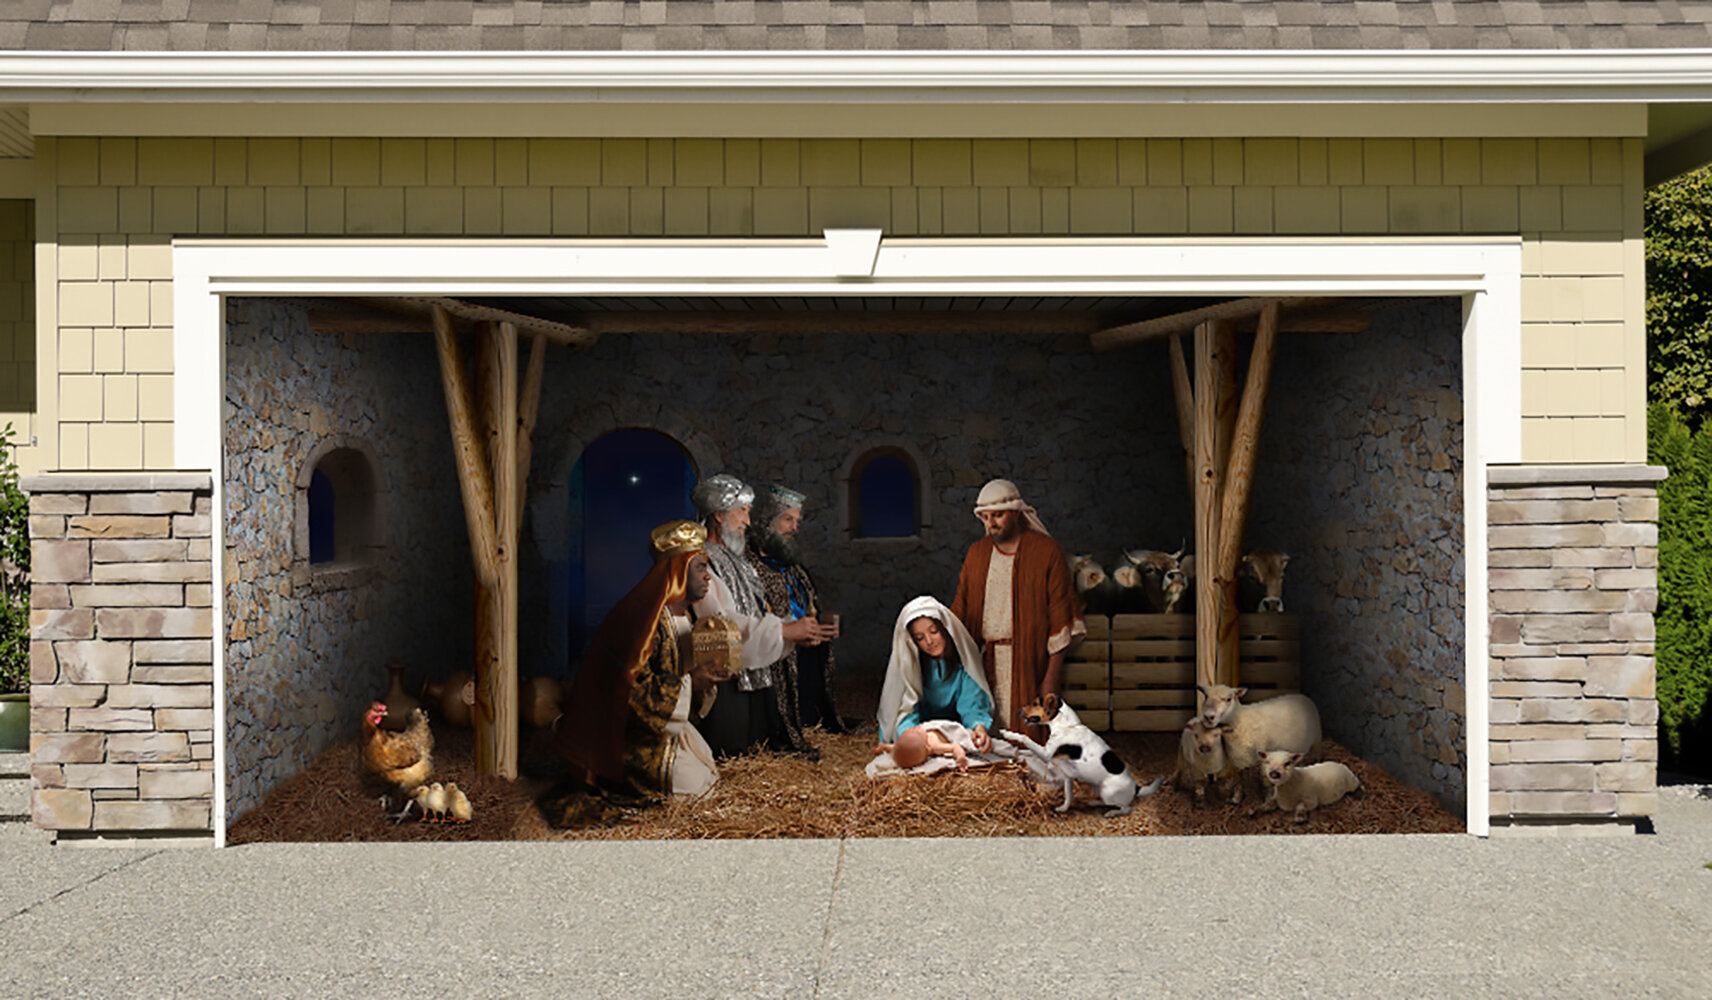 Outdoor Decoration Nativity Scene Christmas Holiday Home Garage Door Decor Banner Billboard Decoration 7 x 16 